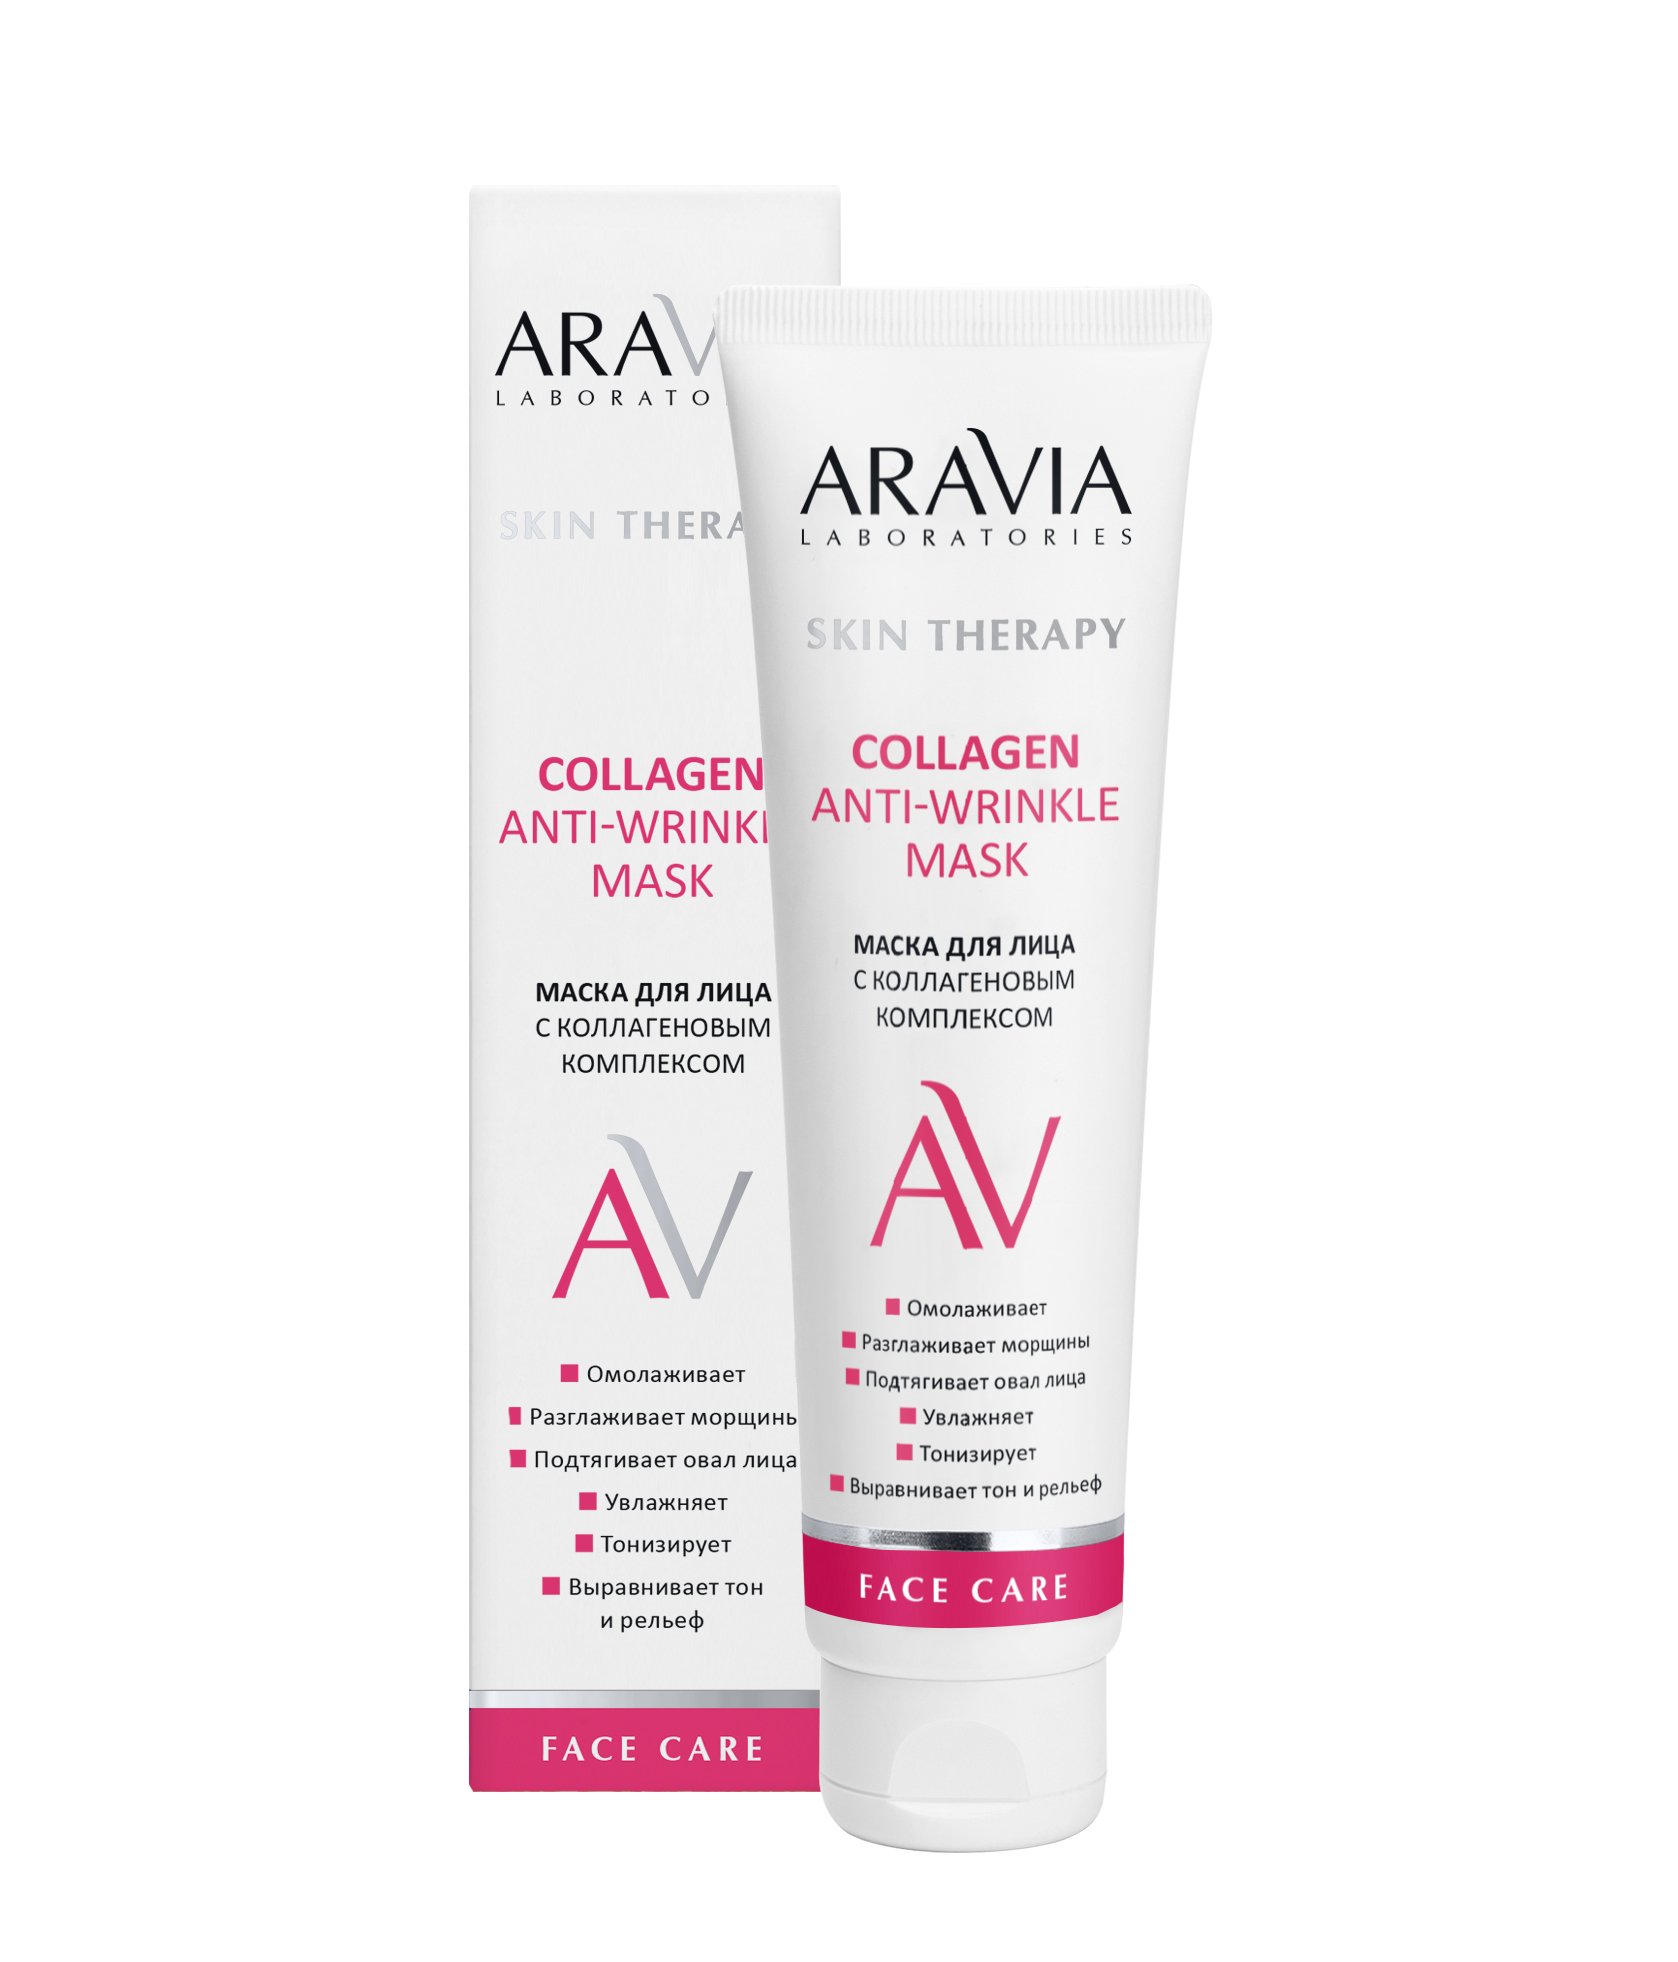 ARAVIA Laboratories Маска для лица с коллагеновым комплексом Collagen Anti-wrnkle Mask, 100 мл